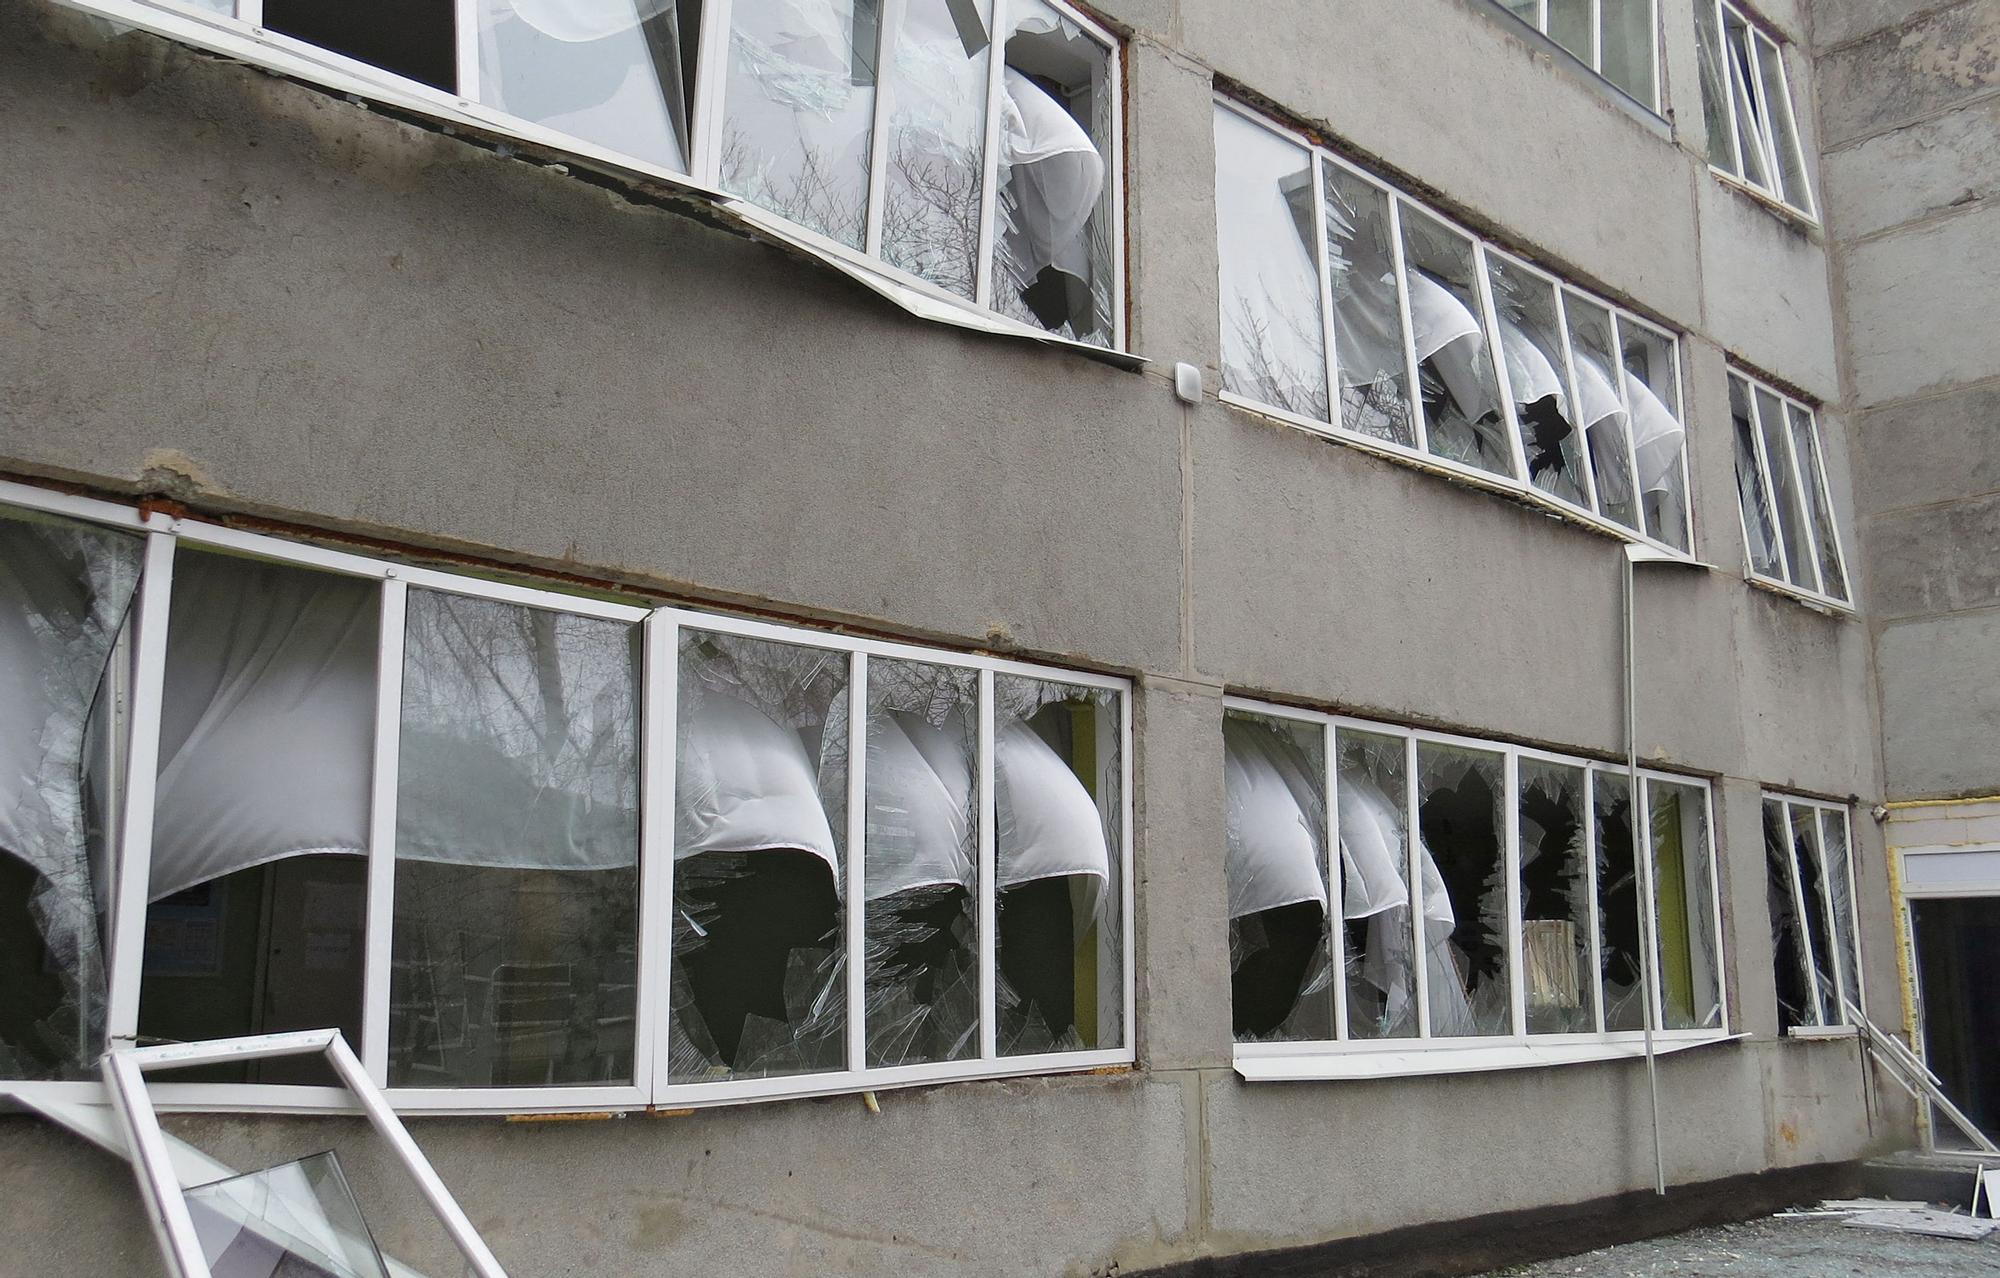 Tropes russes bombardegen l'hospital infantil de Mariúpol